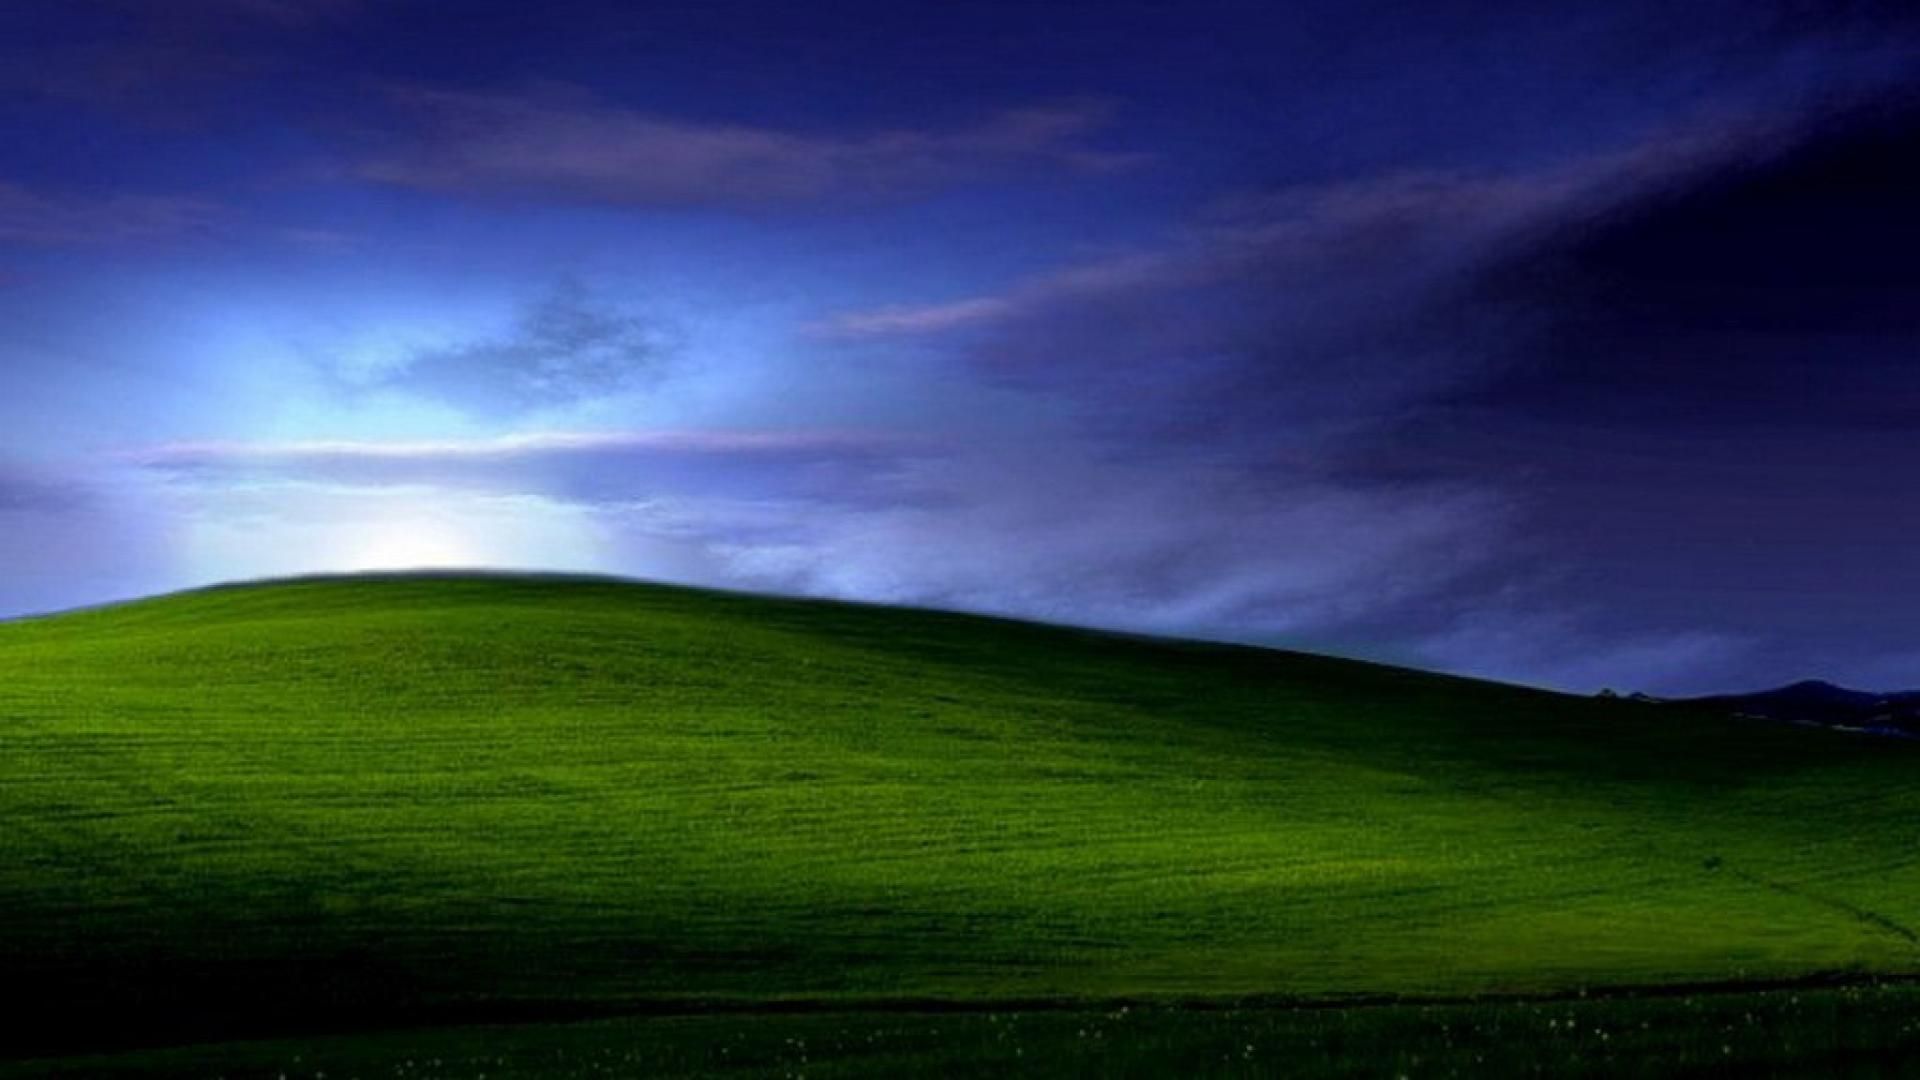 Windows Xp Background